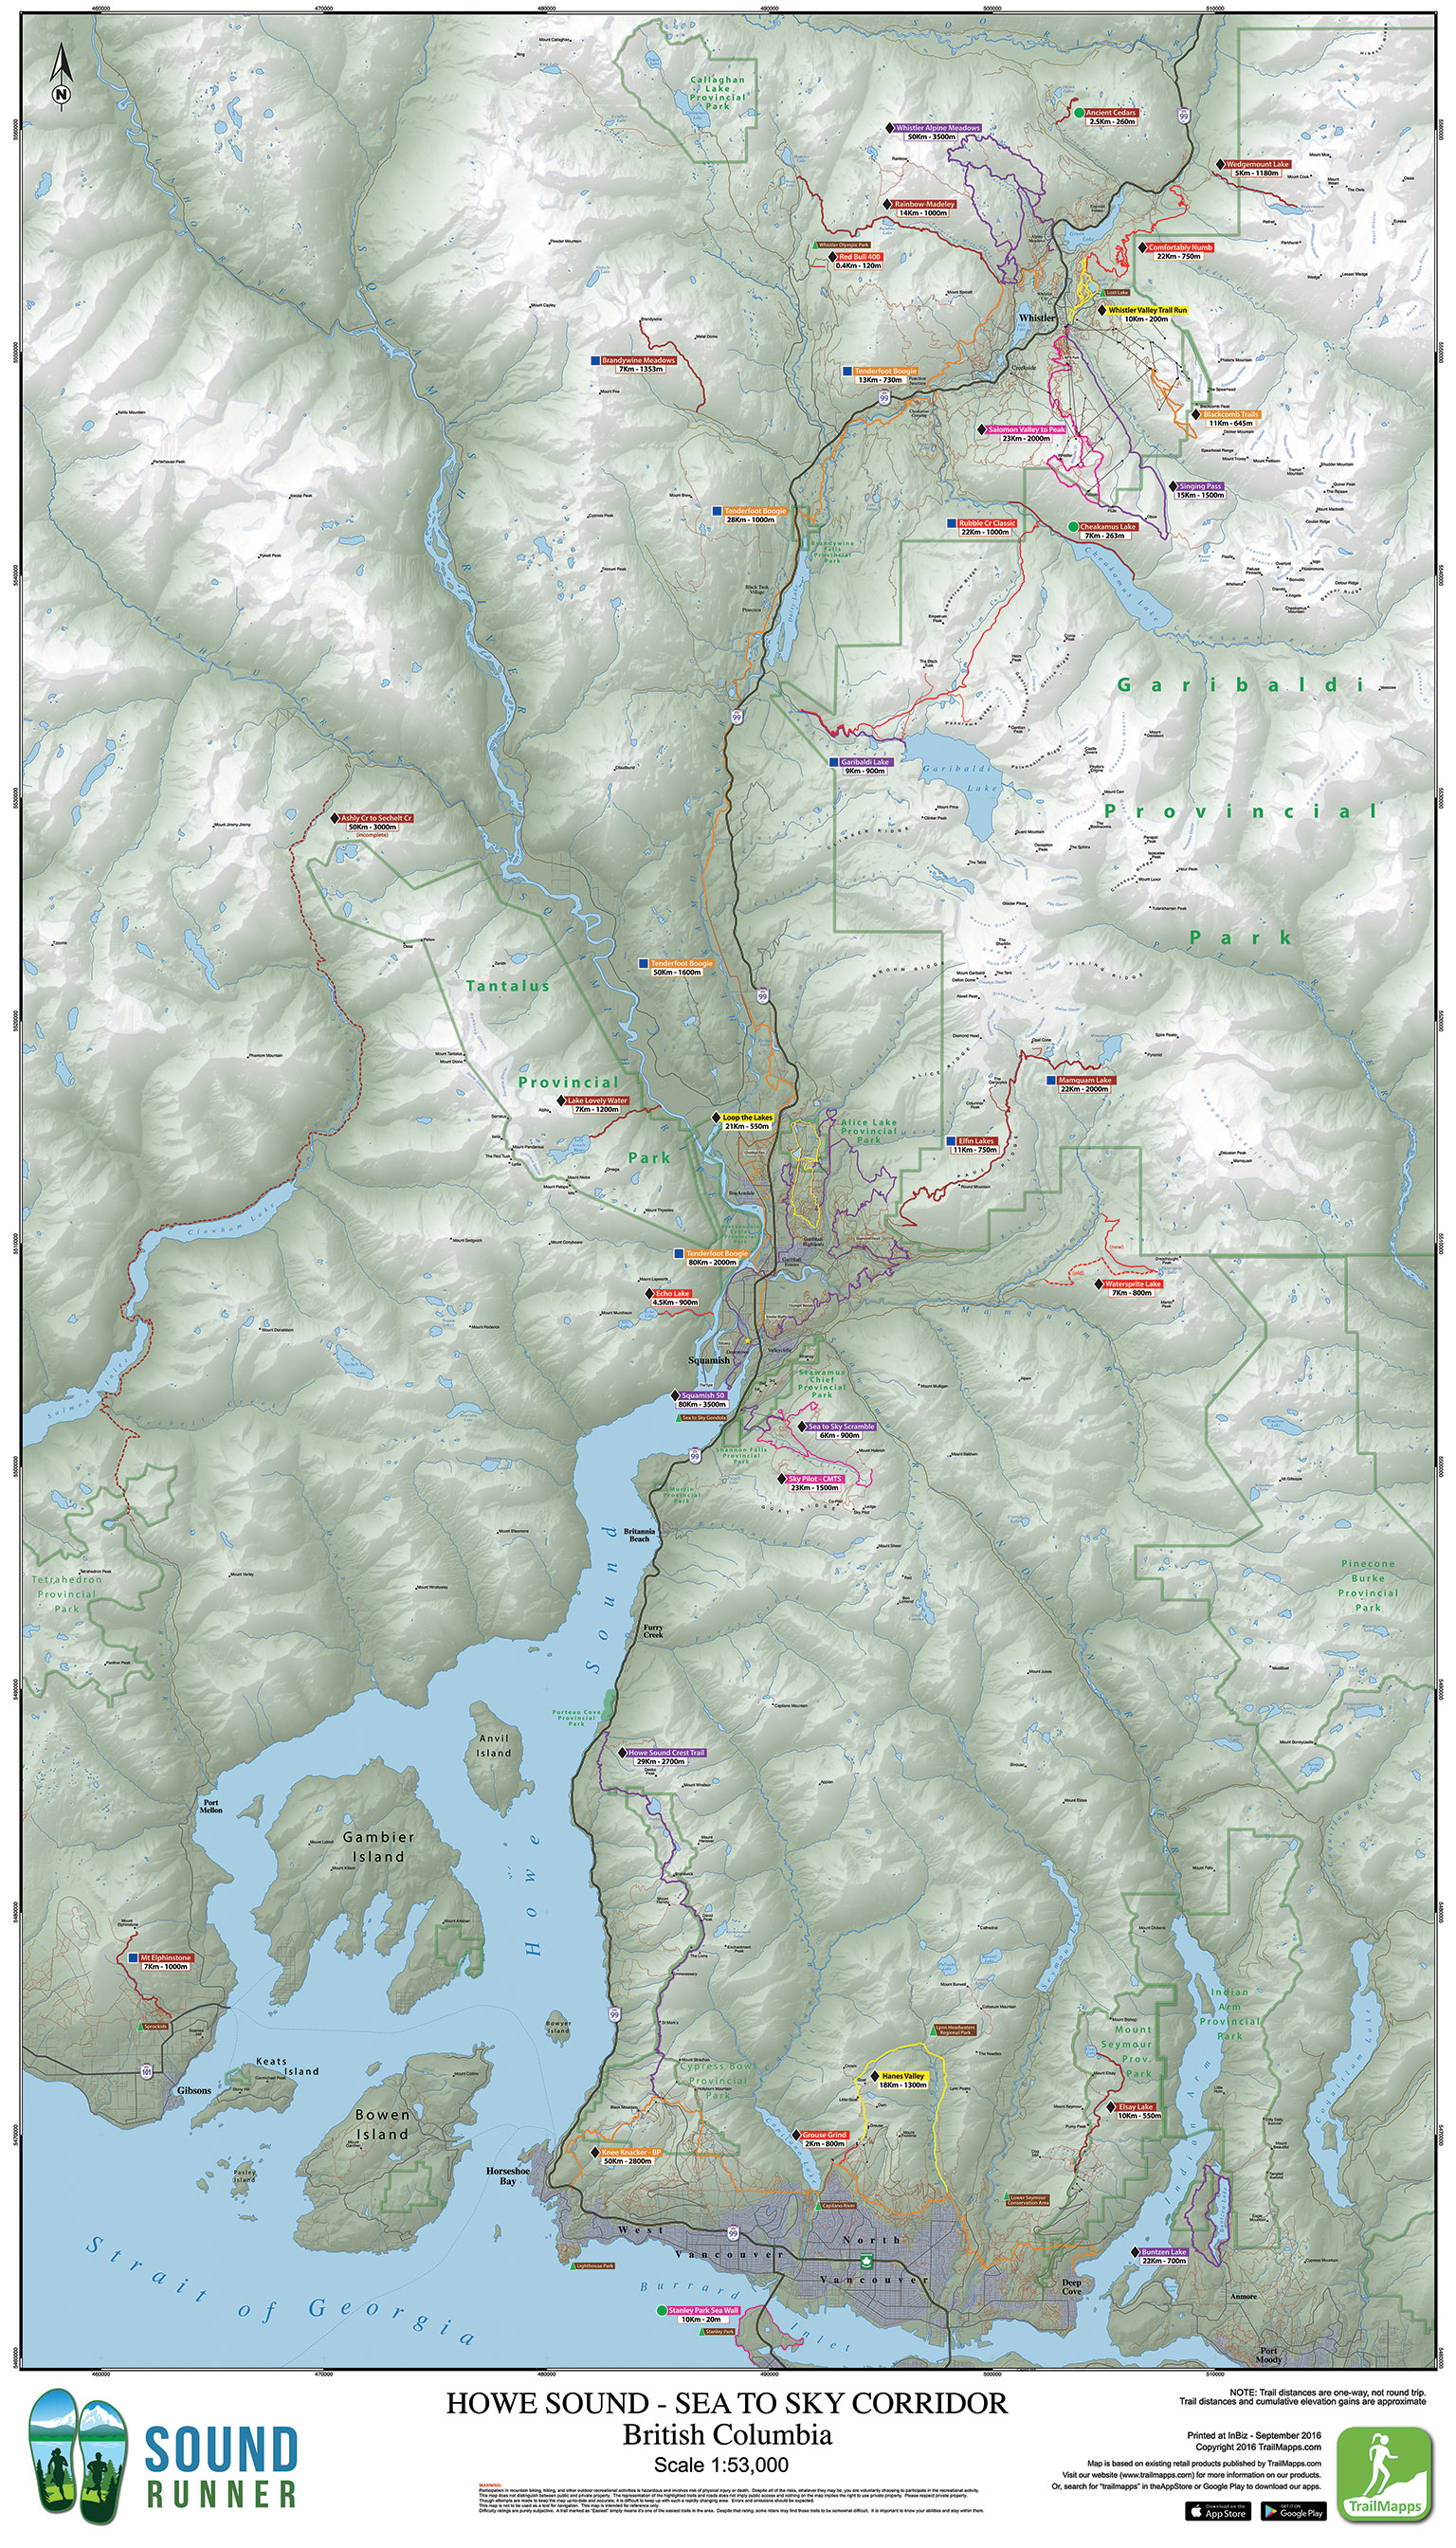 TrailMapps: Tourism Squamish Visitors Brochure